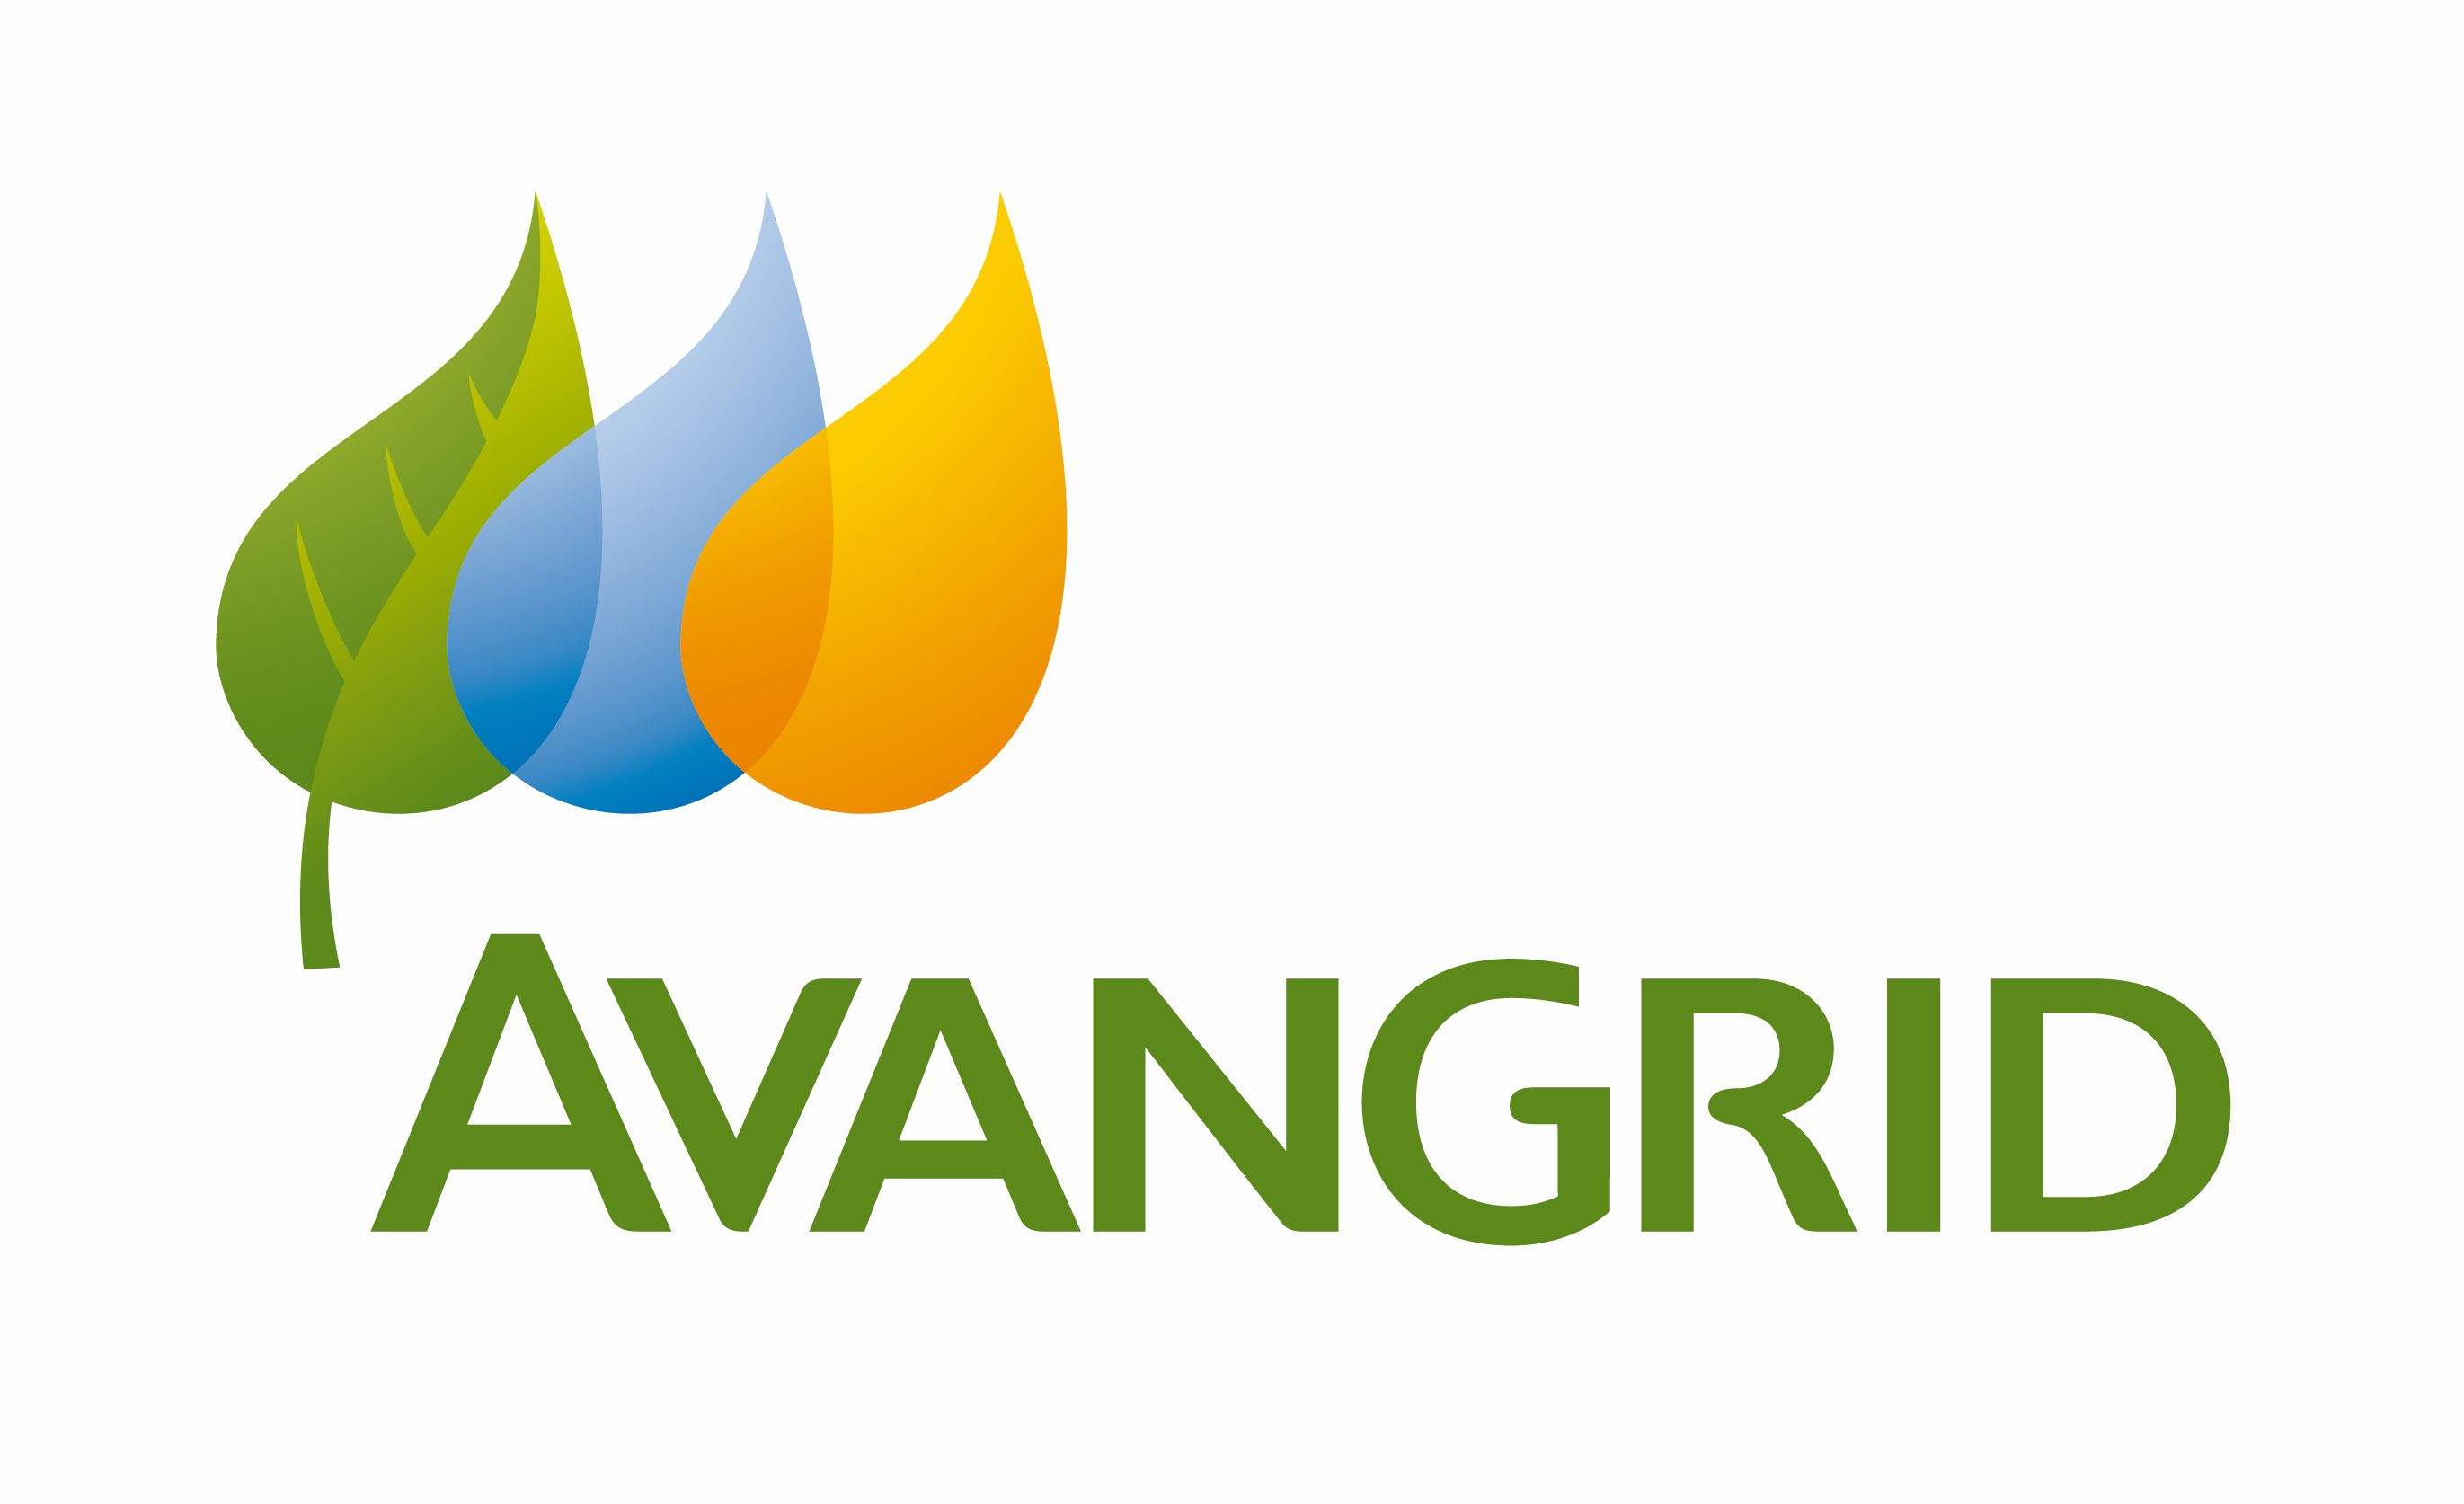 AVANGRID logo